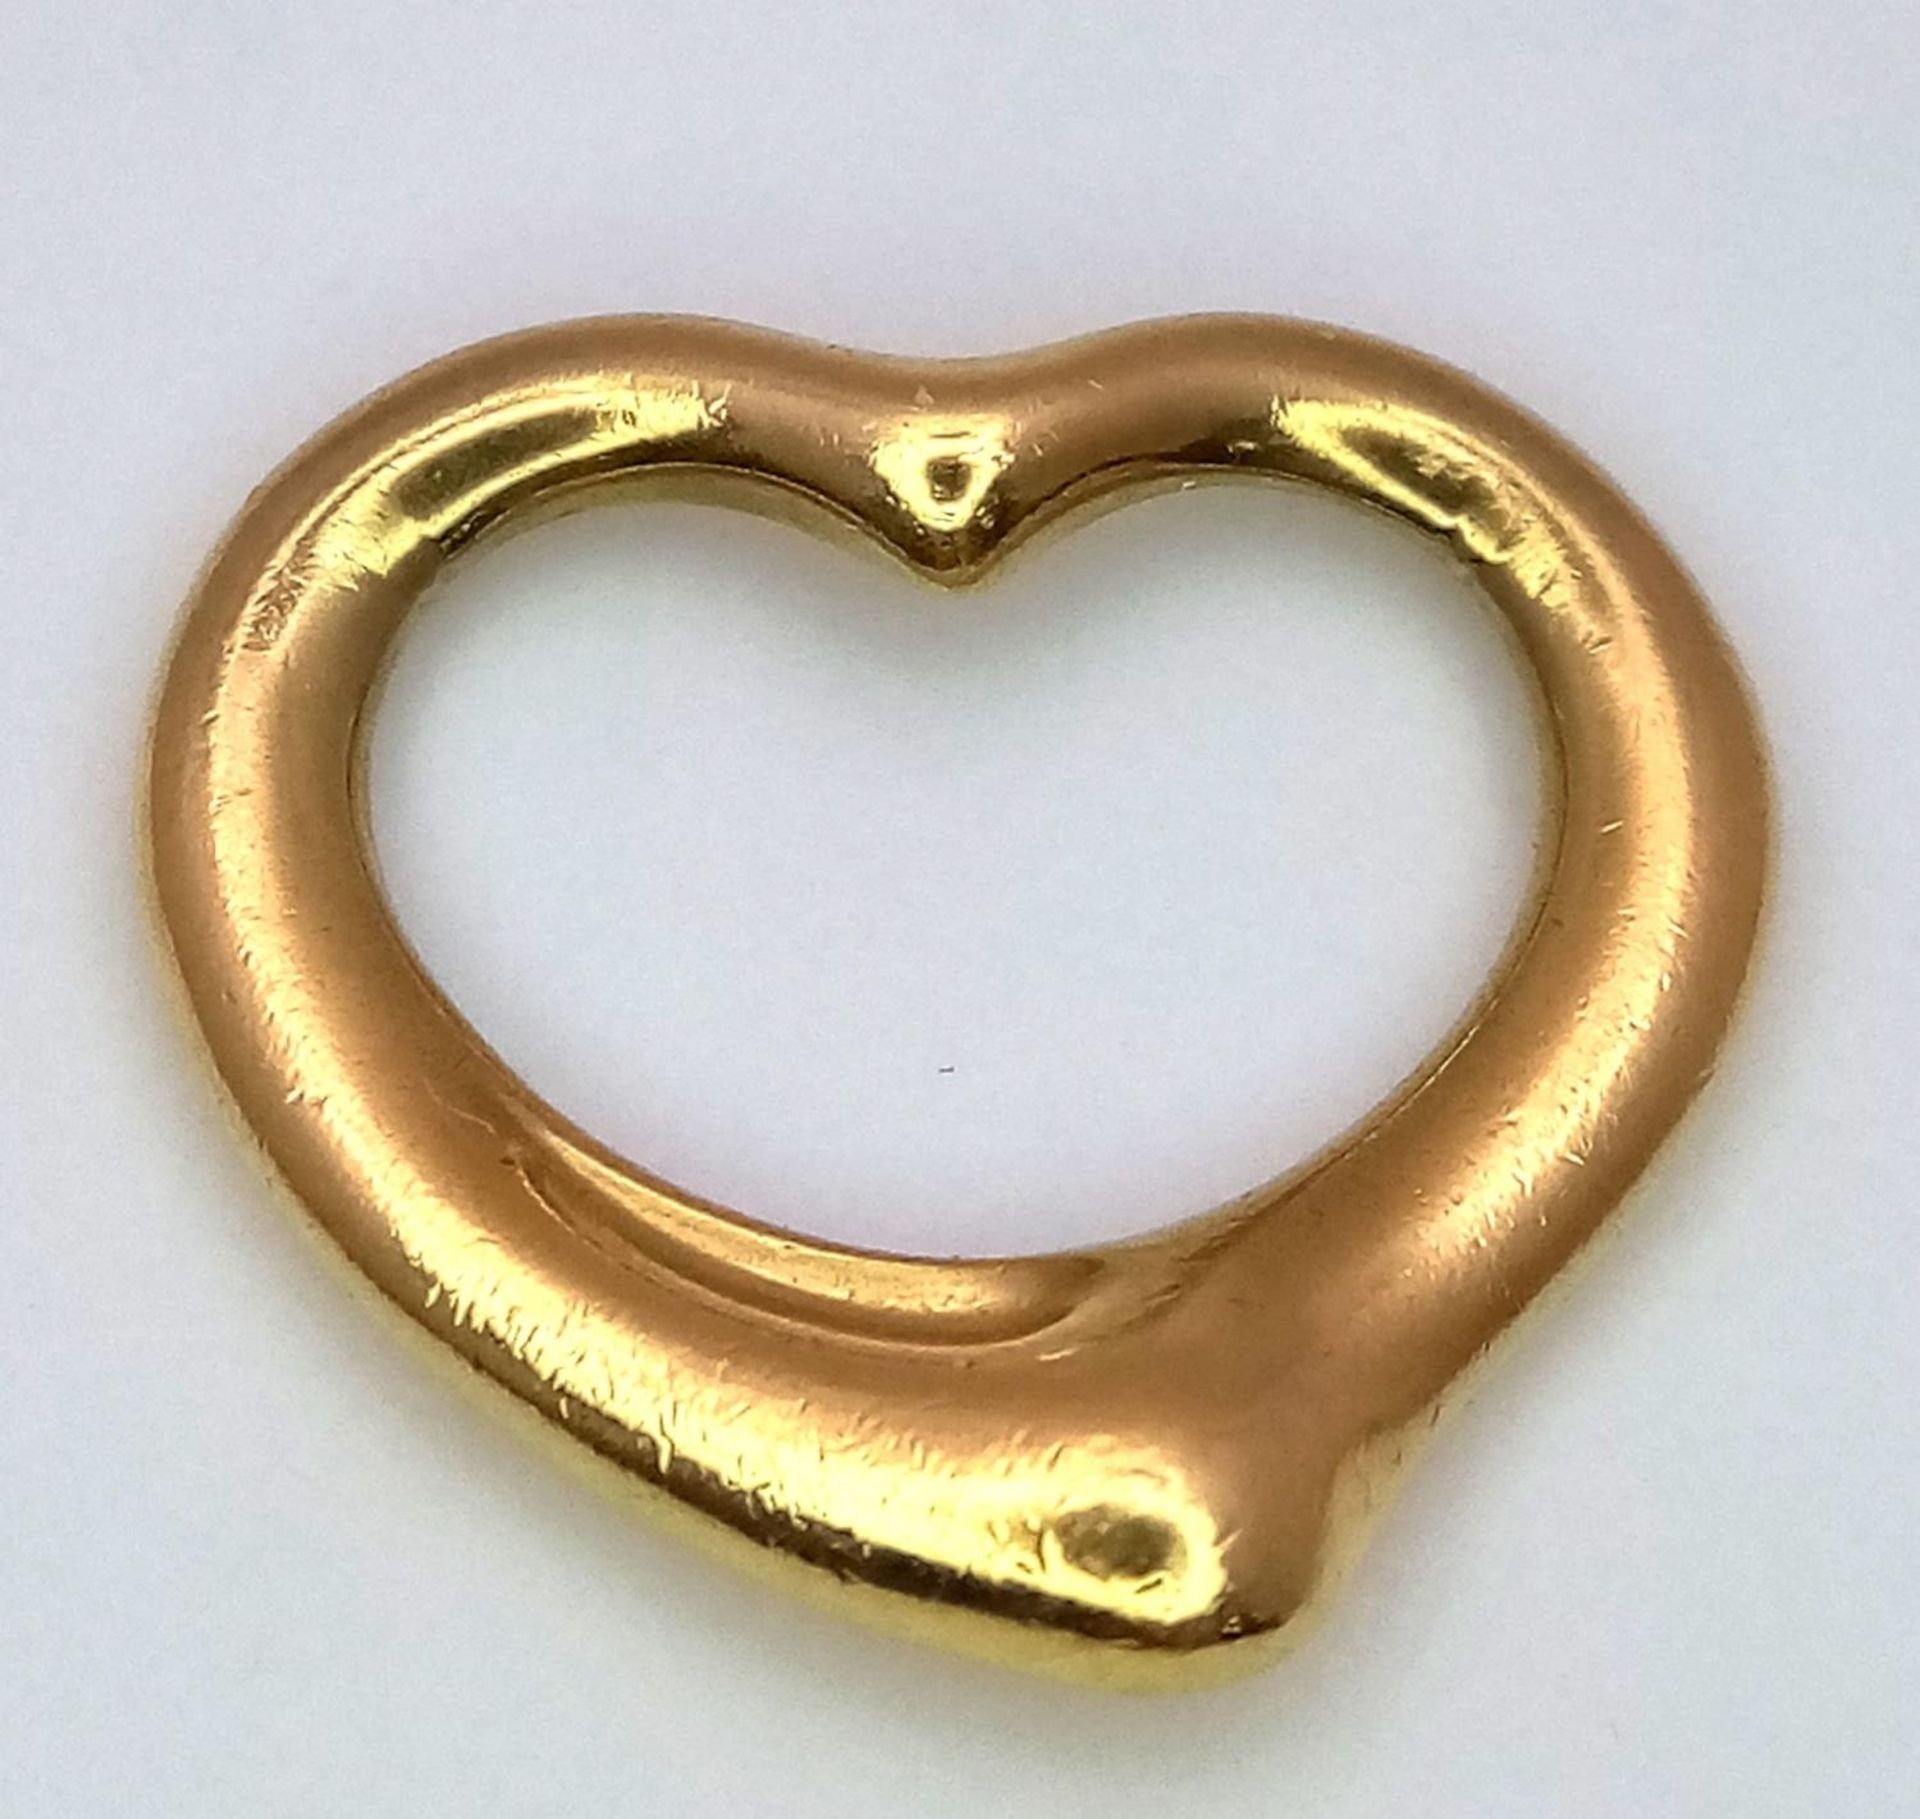 A Tiffany and Co. 18K Yellow Gold Heart Pendant. Tiffany markings. 15 x 15mm. 2g